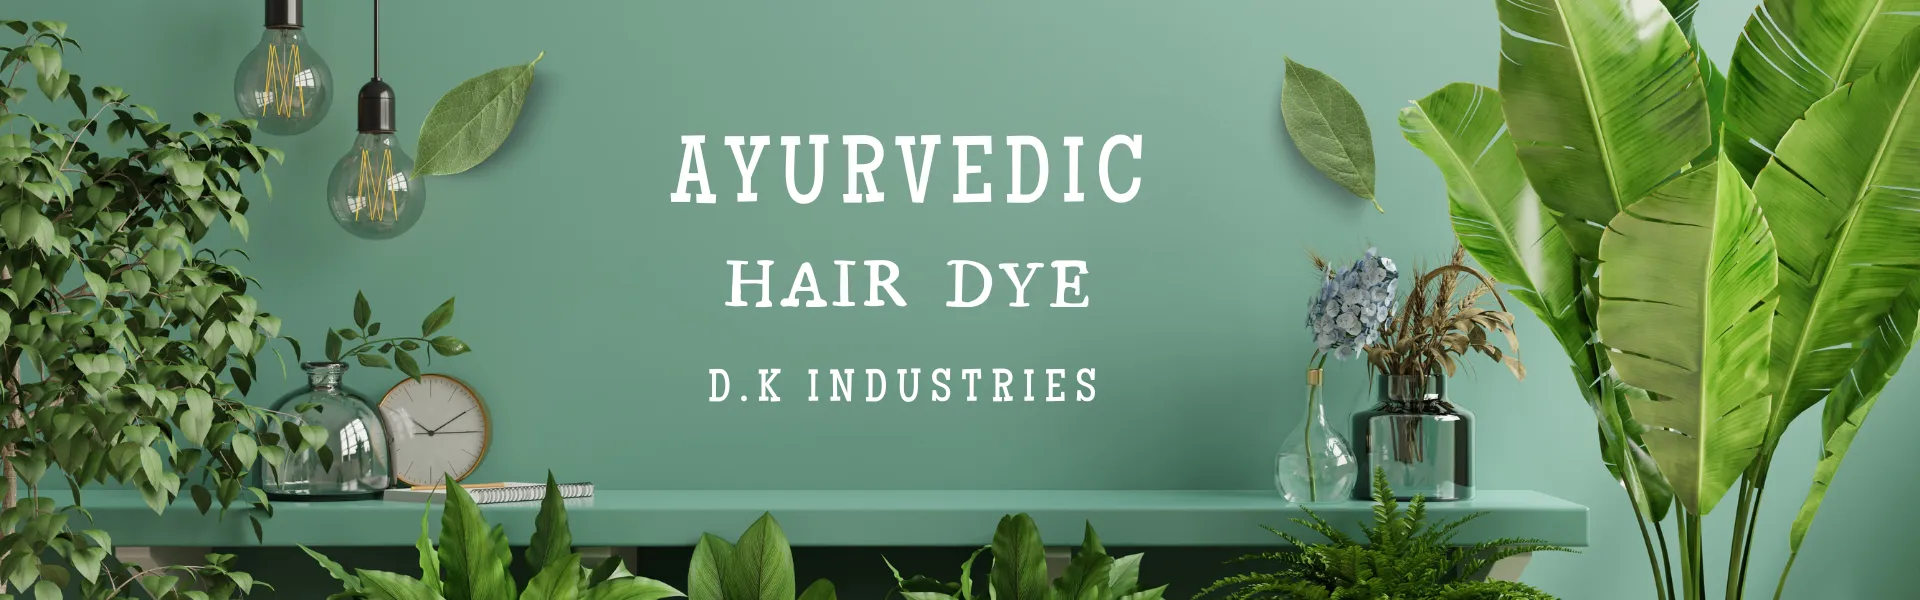 Ayurvedic hair dye - www.dkihenna.com